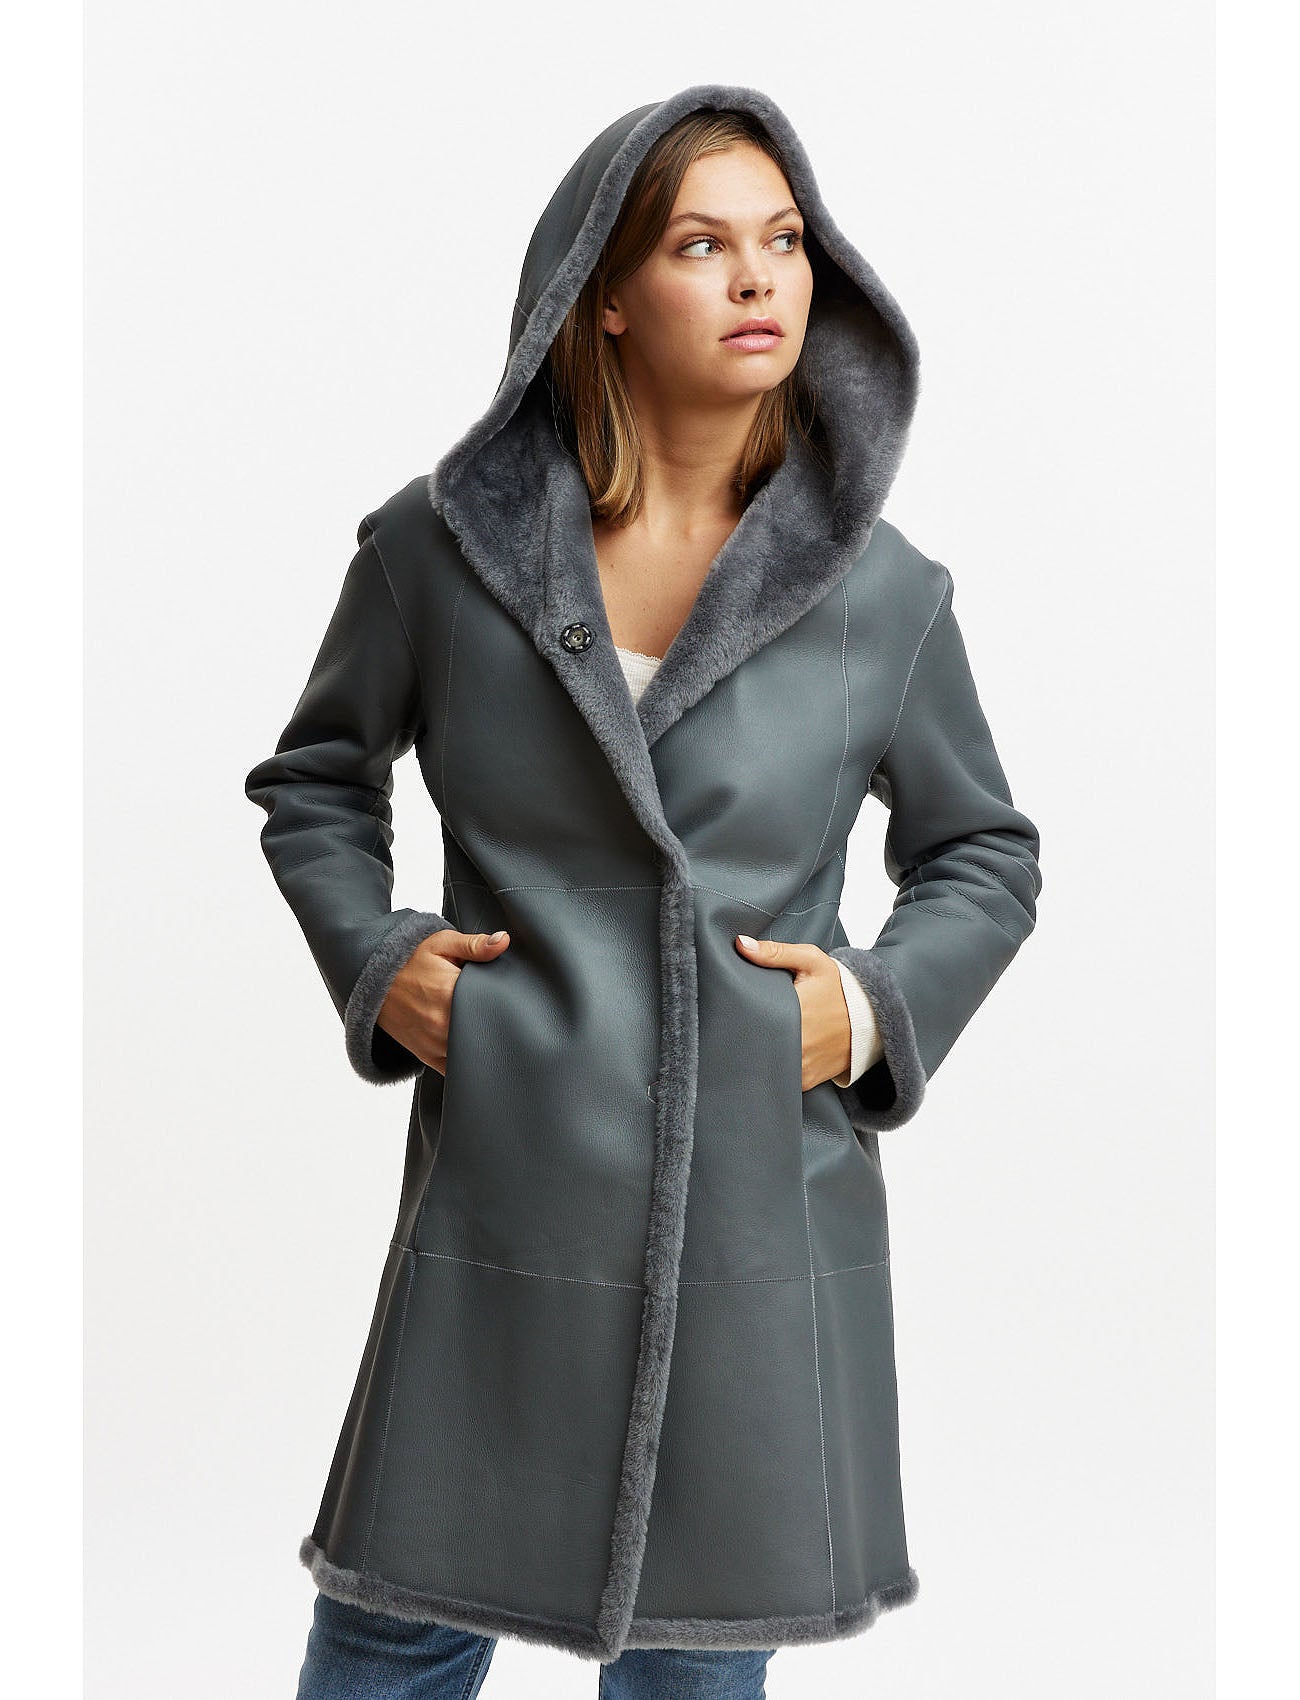 Merino lambskin jacket reversible 2in1 - grey